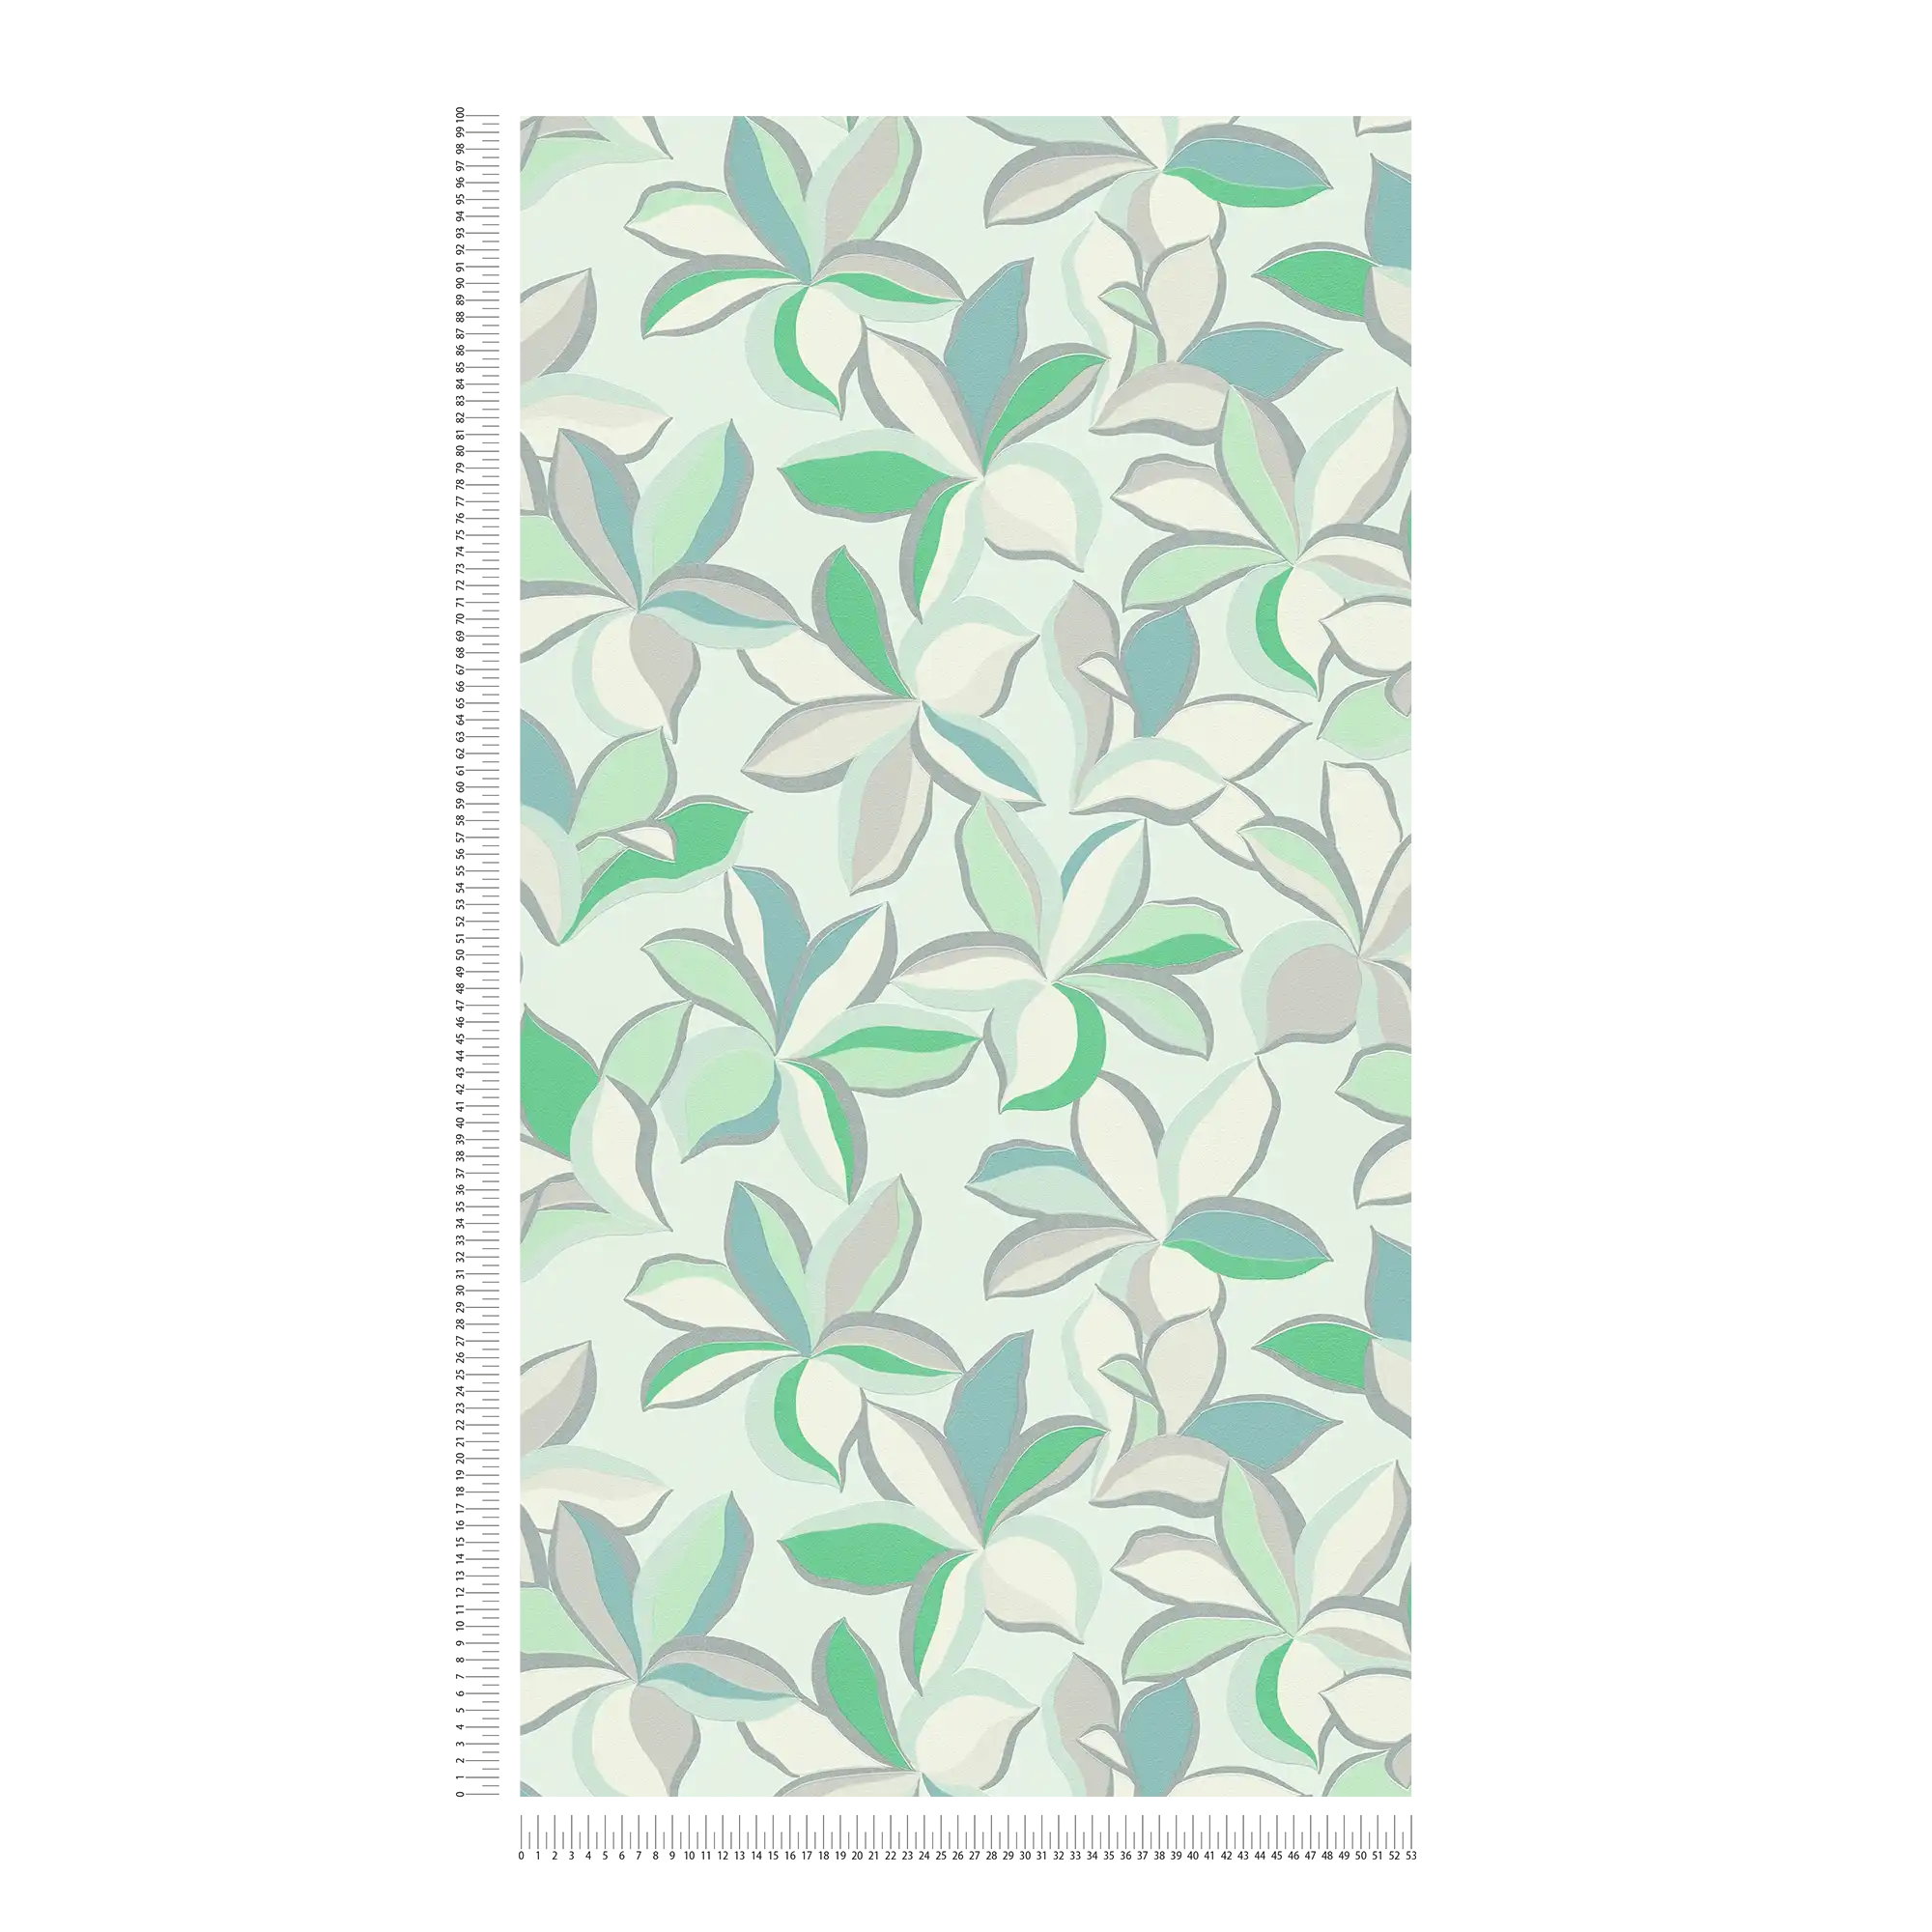             Florale Vliestapete mit Glanzstruktur – Grün, Grau
        